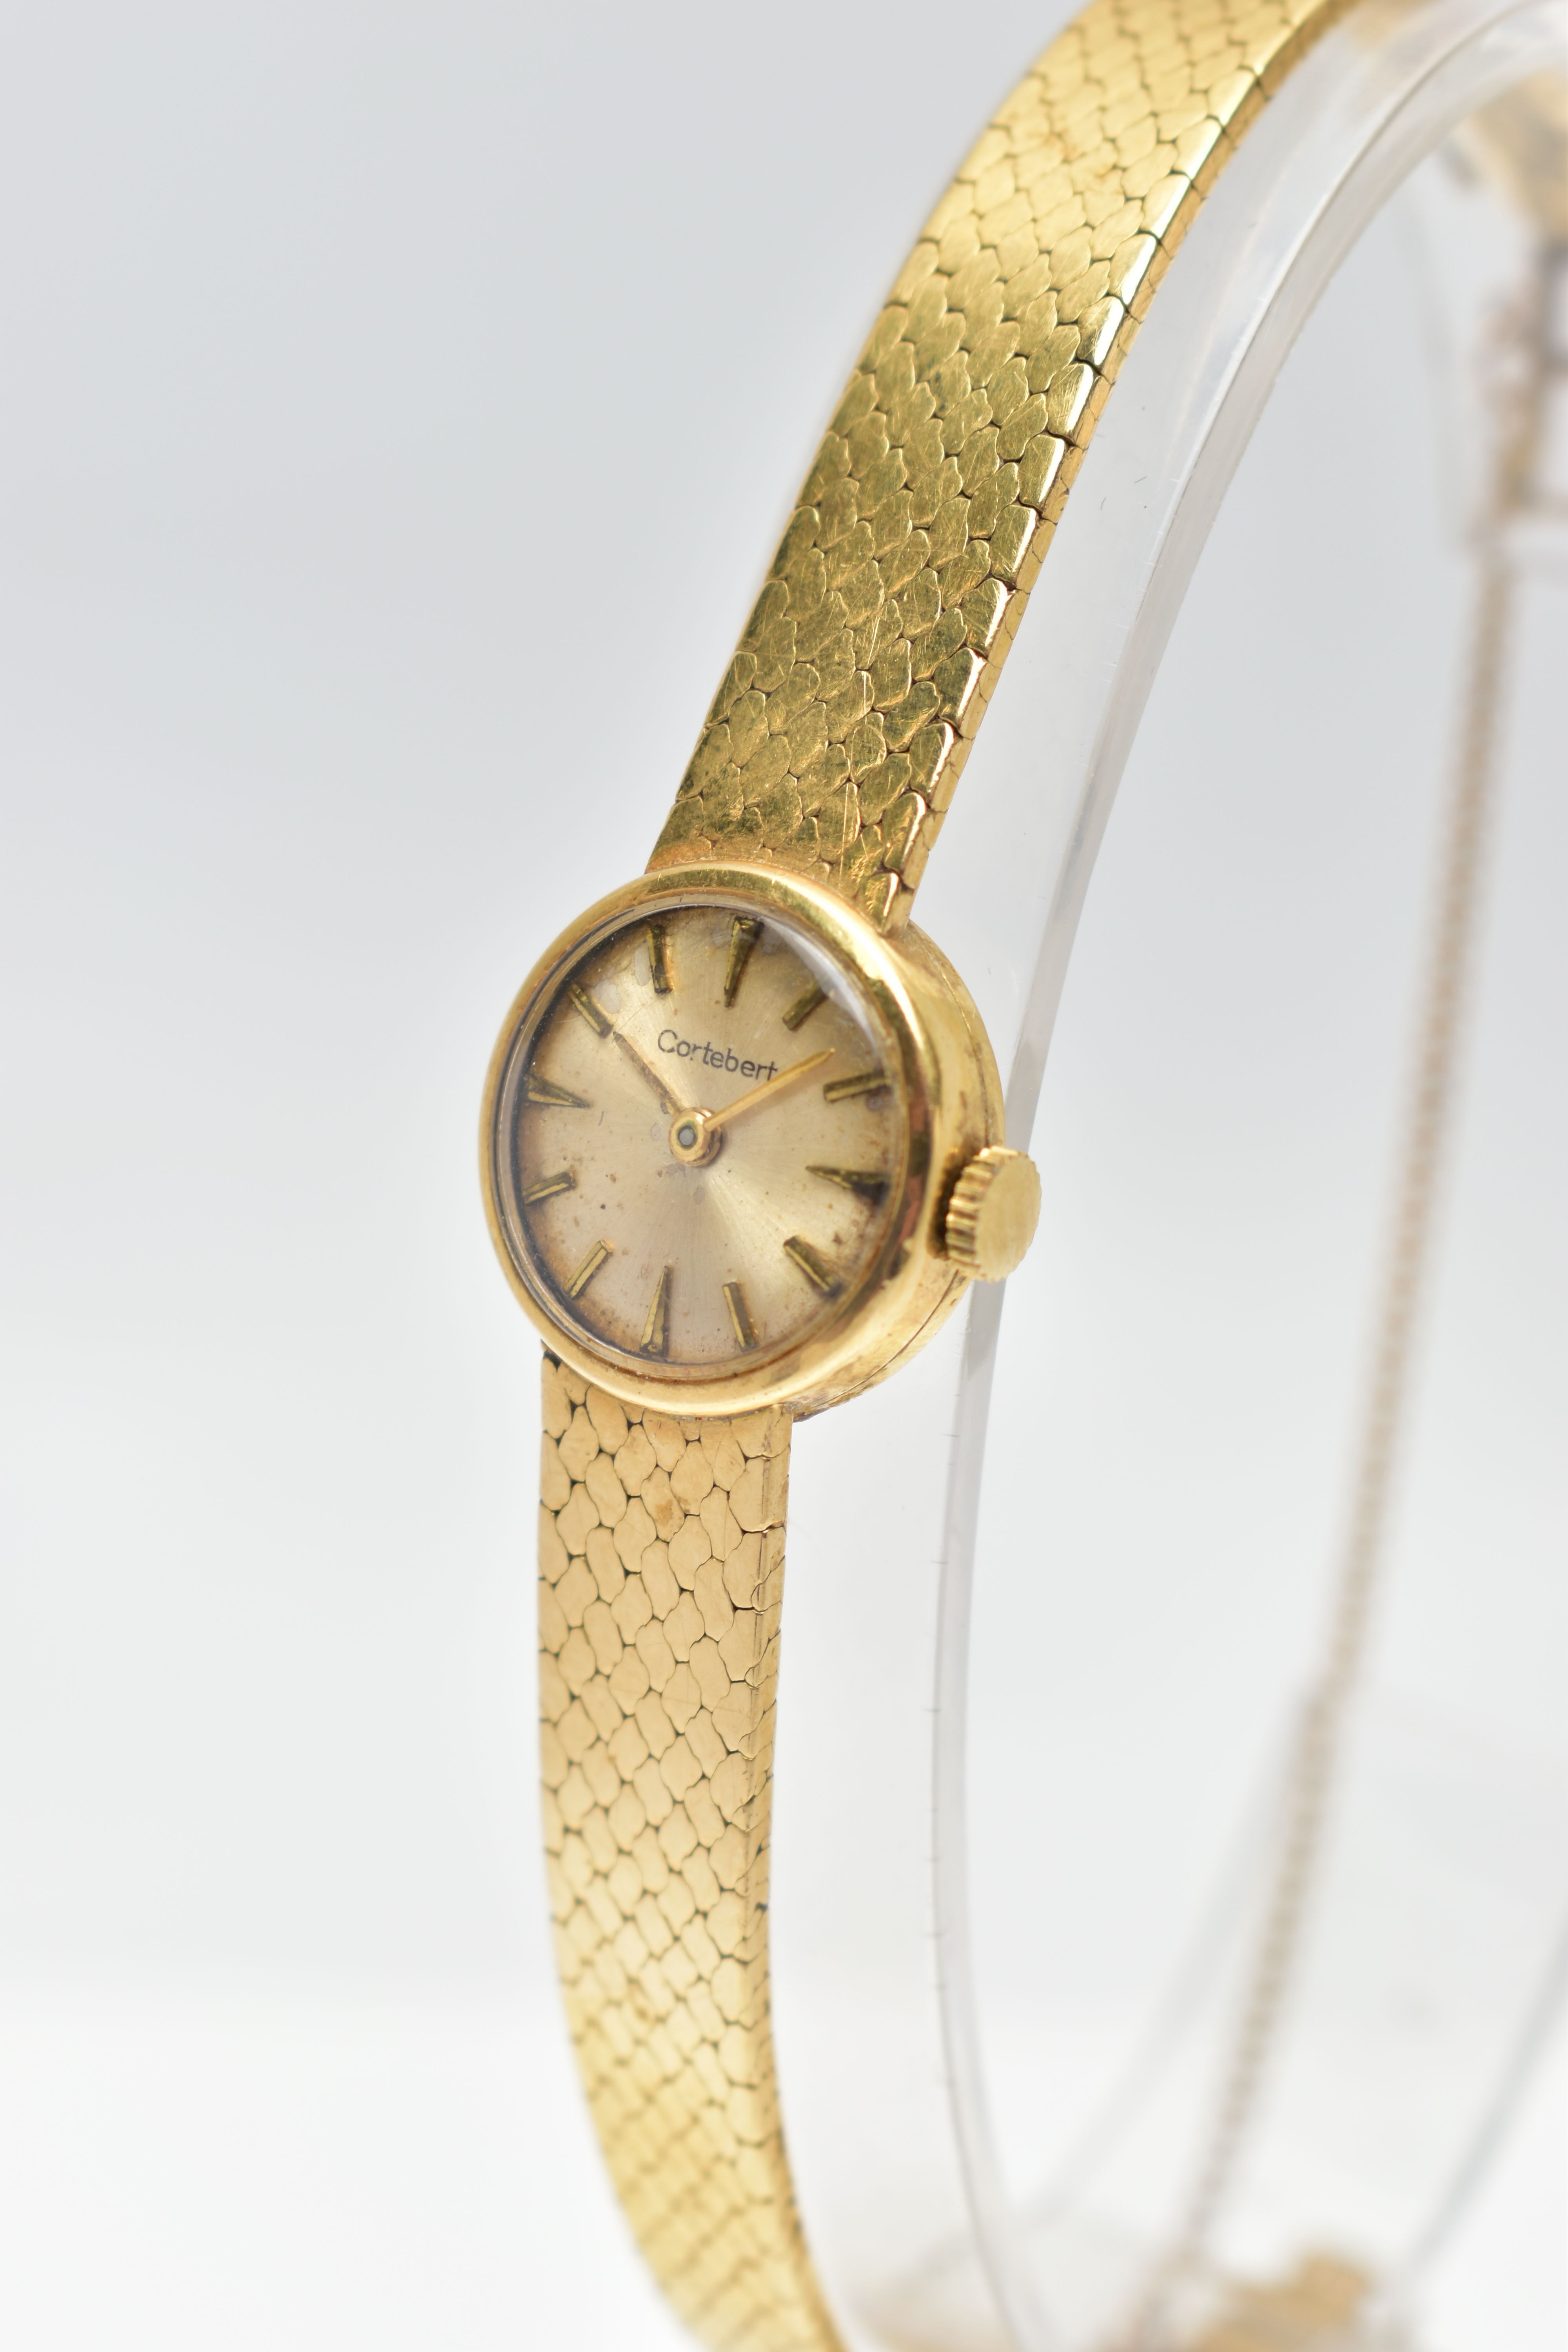 A LADIES 18CT YELLOW GOLD 'CORTEBERT' WRISTWATCH, manual wind, round gold dial singed 'Cortebert', - Image 3 of 6